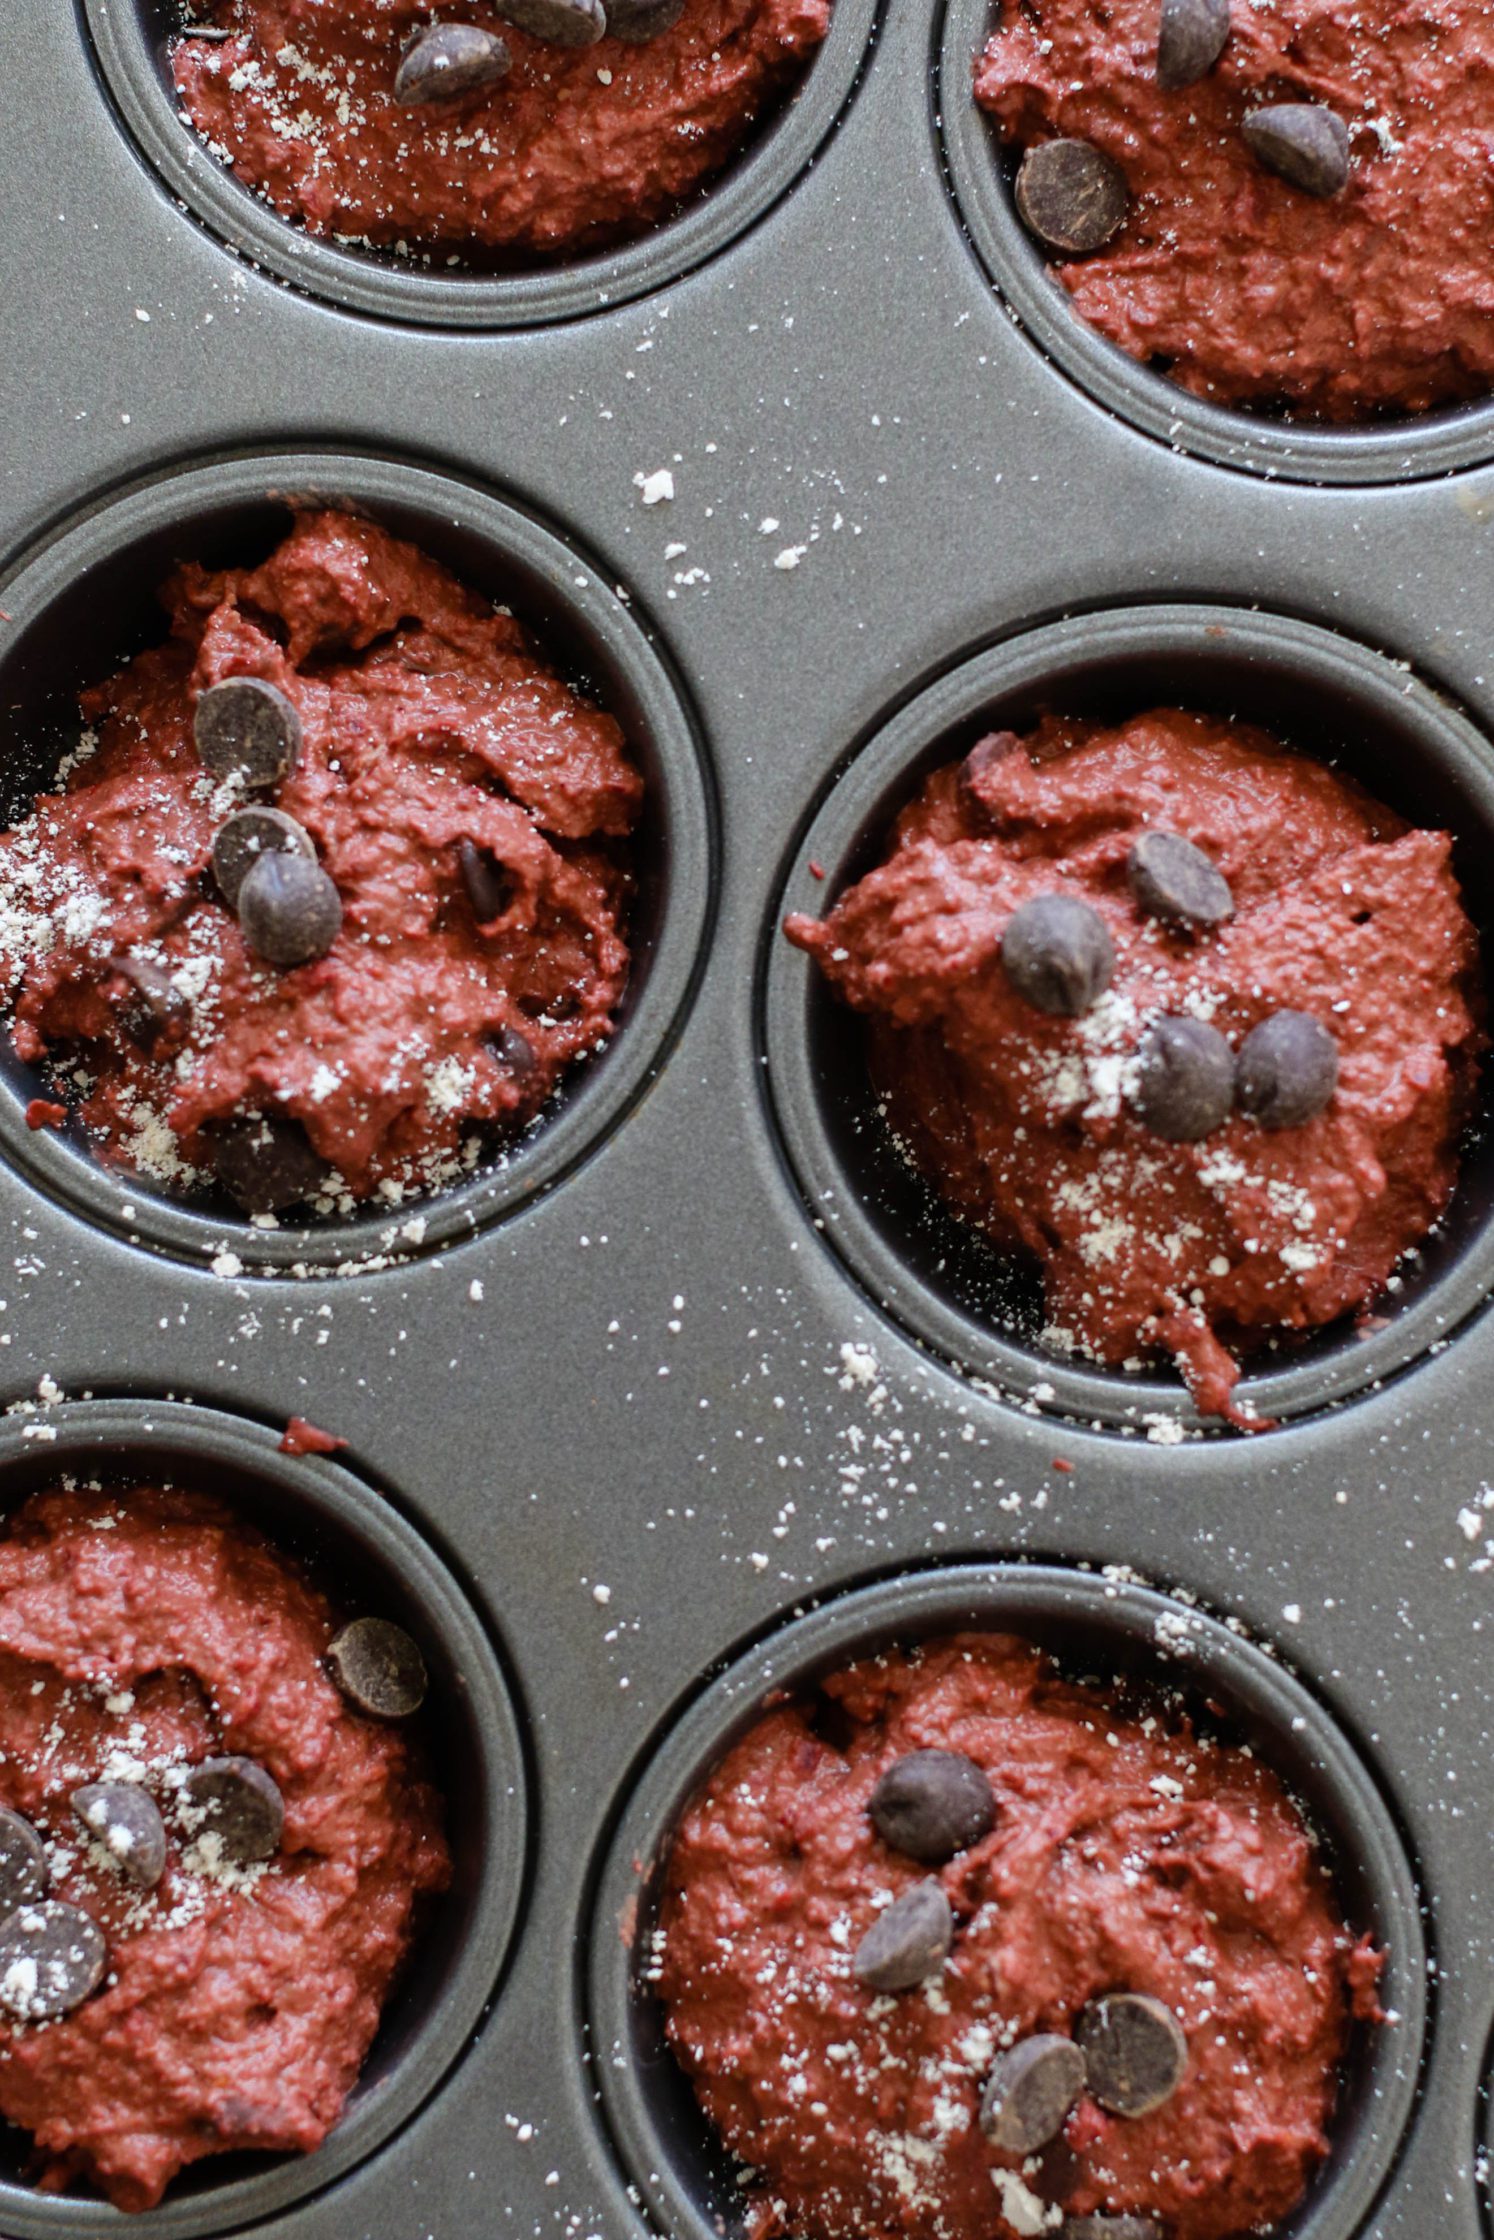 Oil-Free Dark Chocolate Beet Muffins